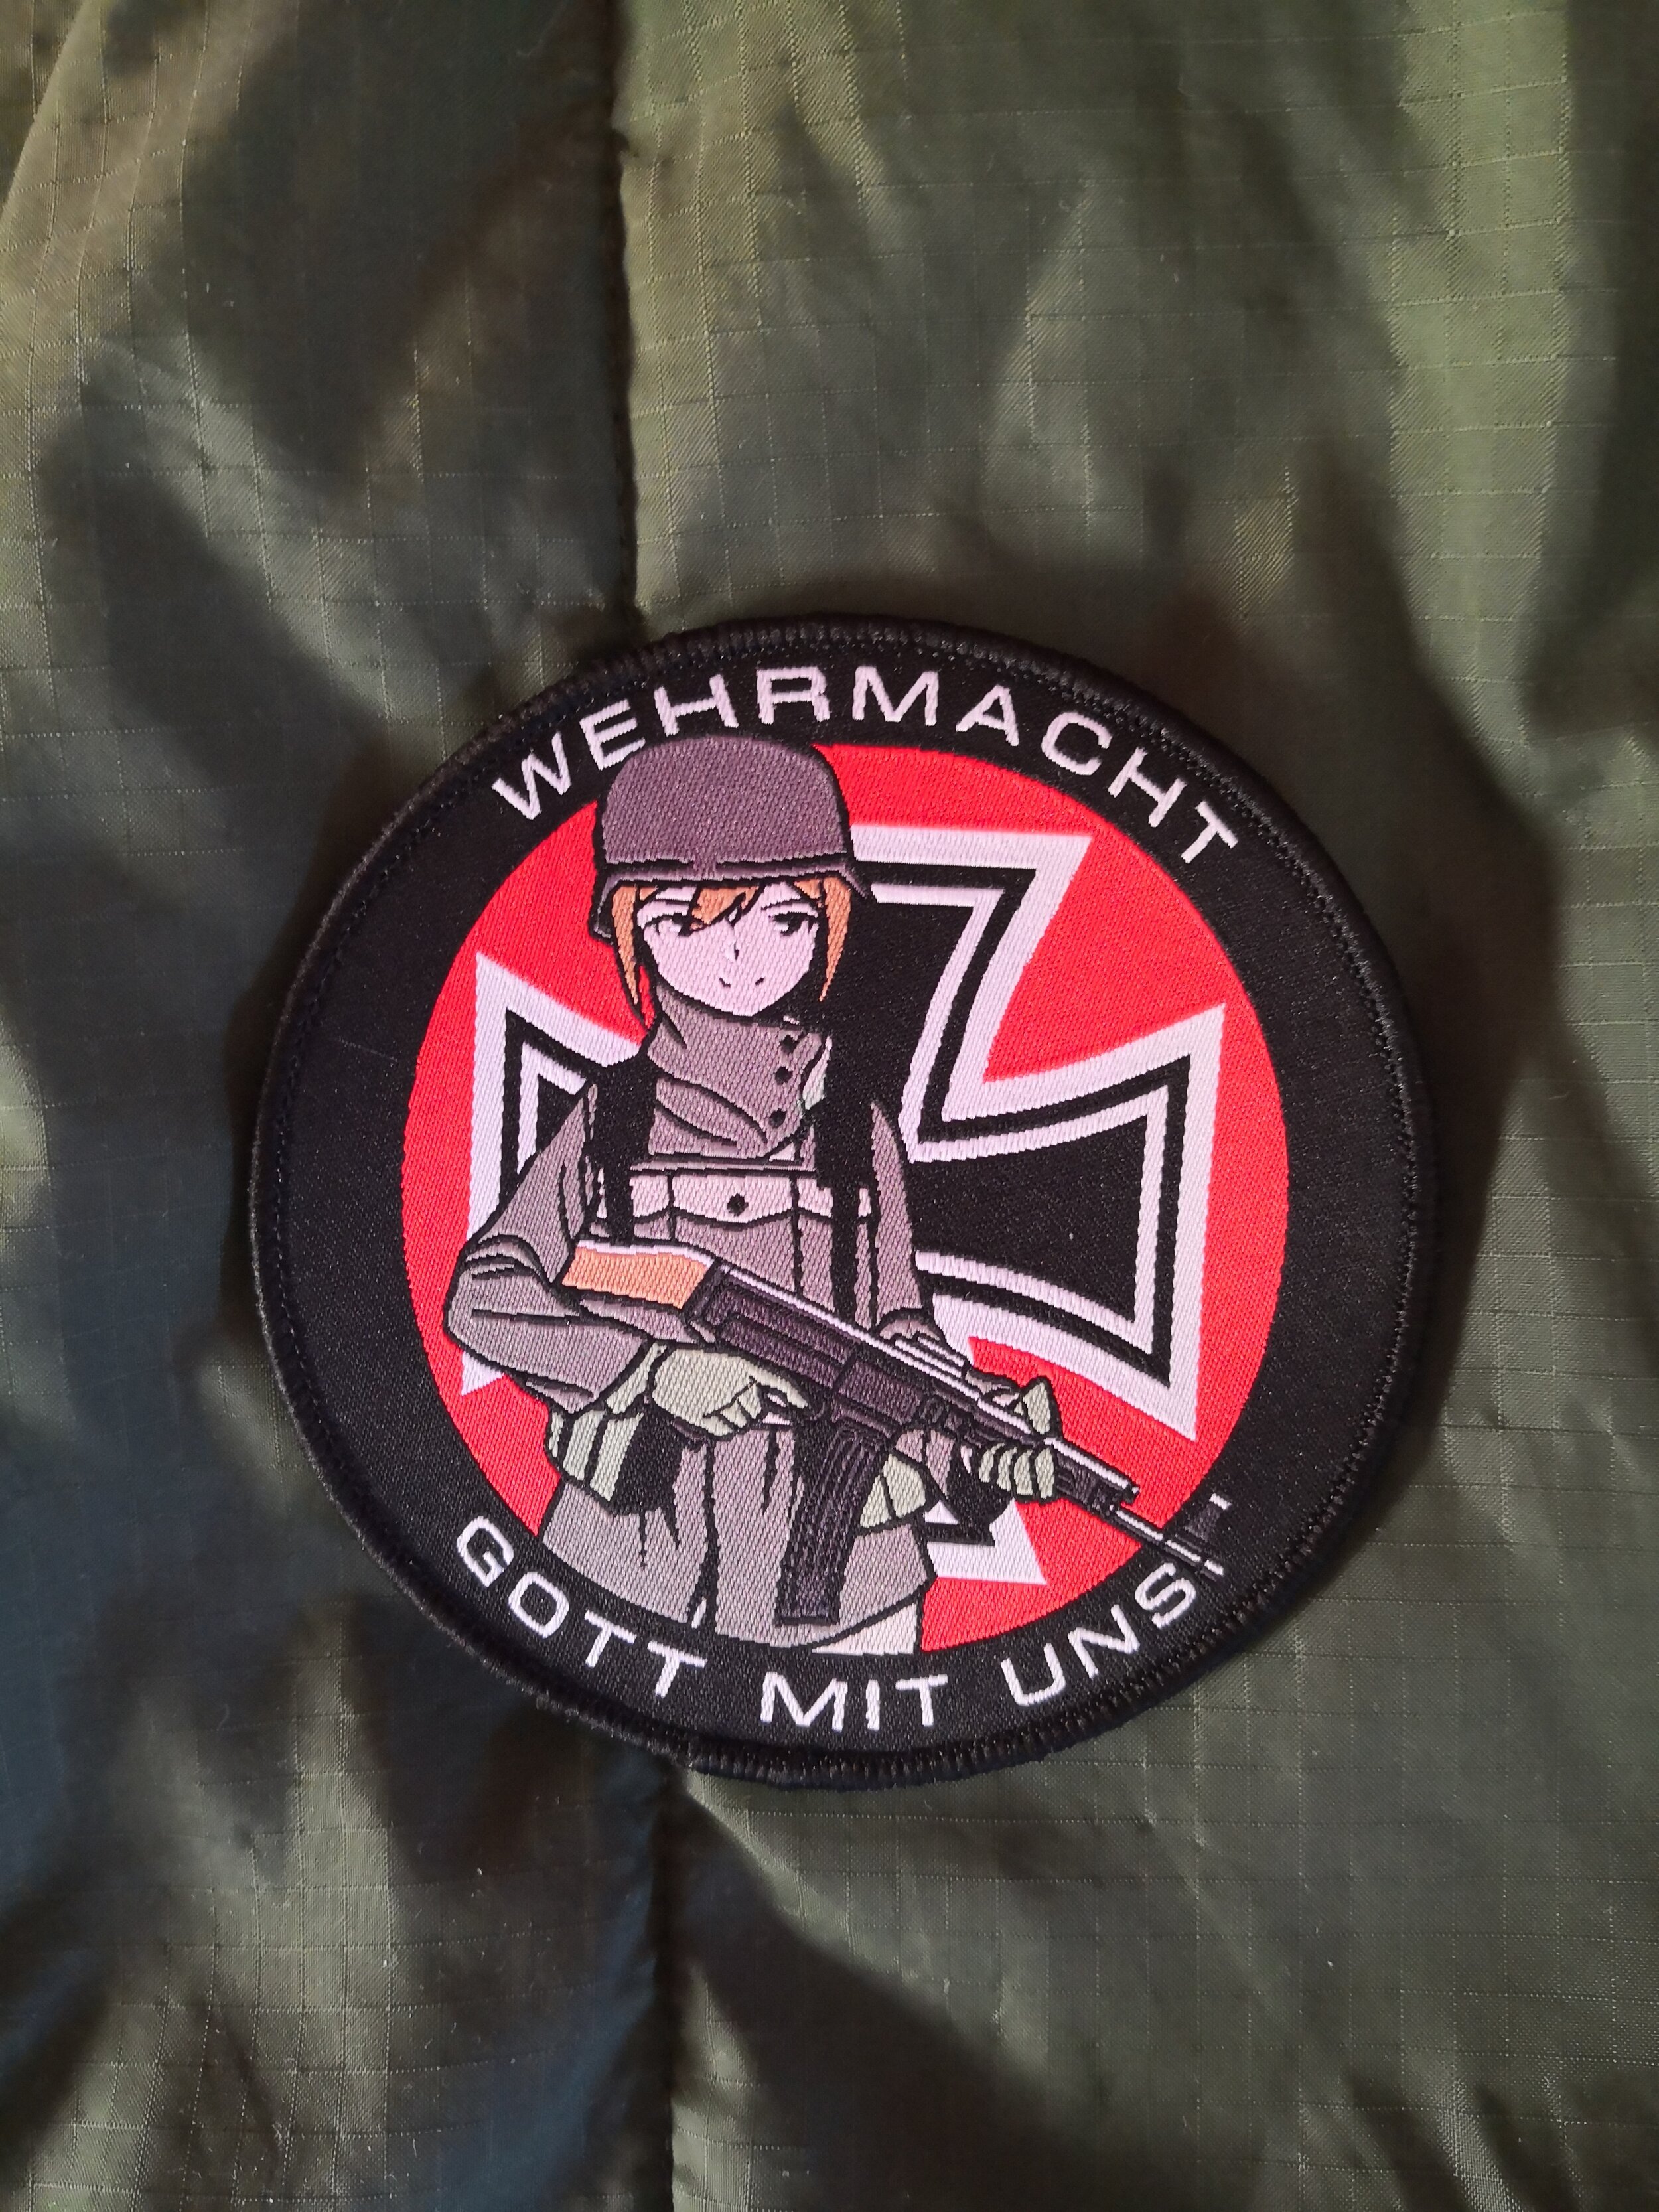 Waifu Material Anime Girl Morale Patch  Military ARMY Tactical Hook  Loop  348  Inox Wind